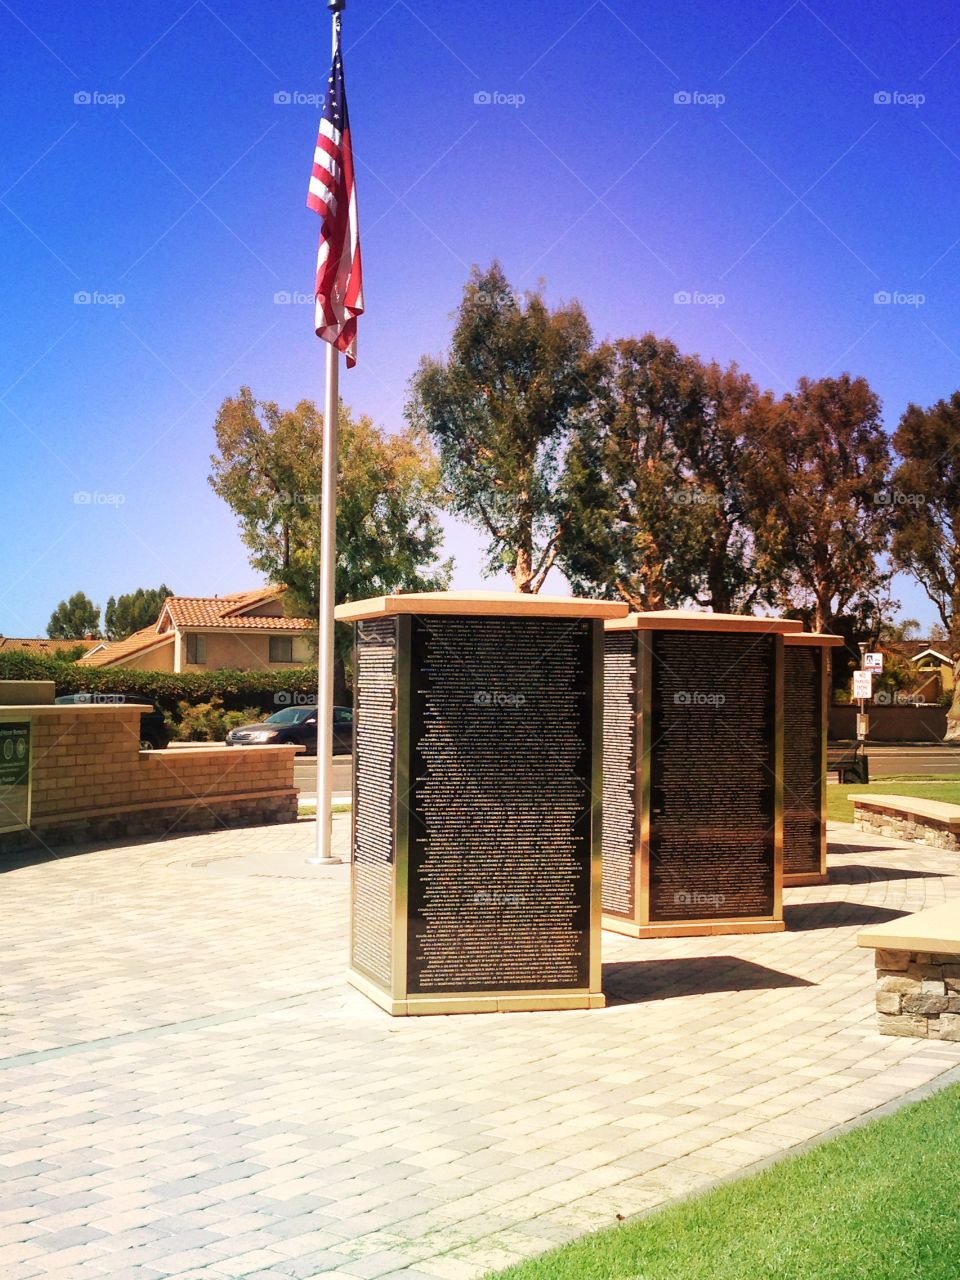 Iraq war memorial - Irvine, CA